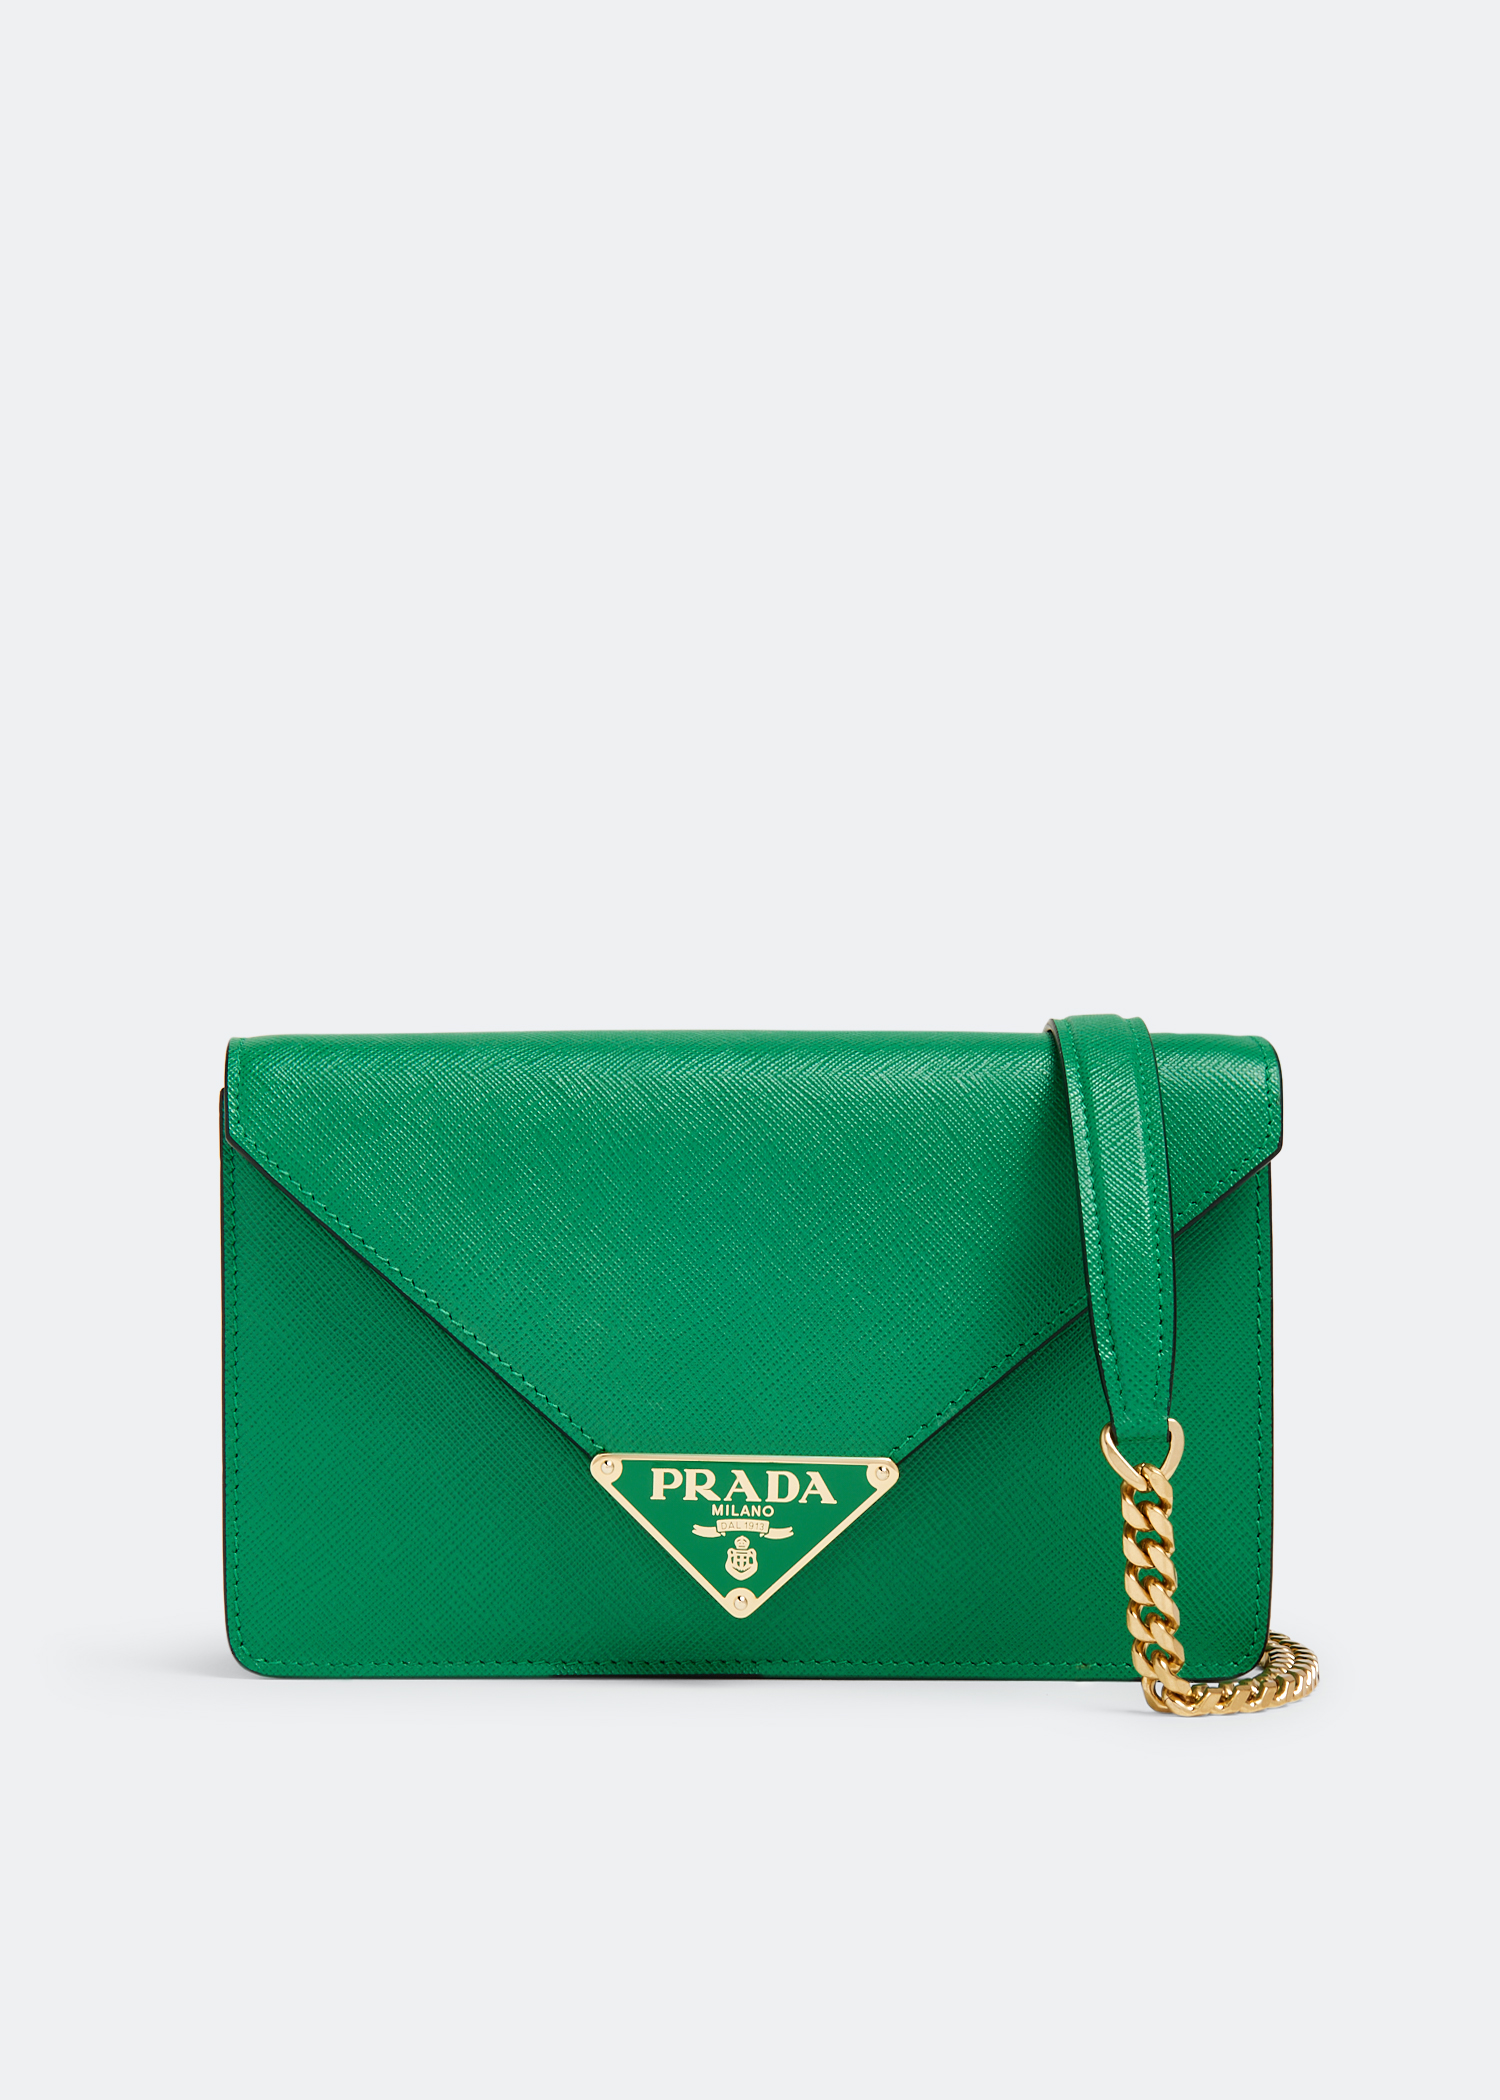 Authentic PRADA Green Shade Nylon Shoulder Crossbody Bag Purse #55480 | eBay